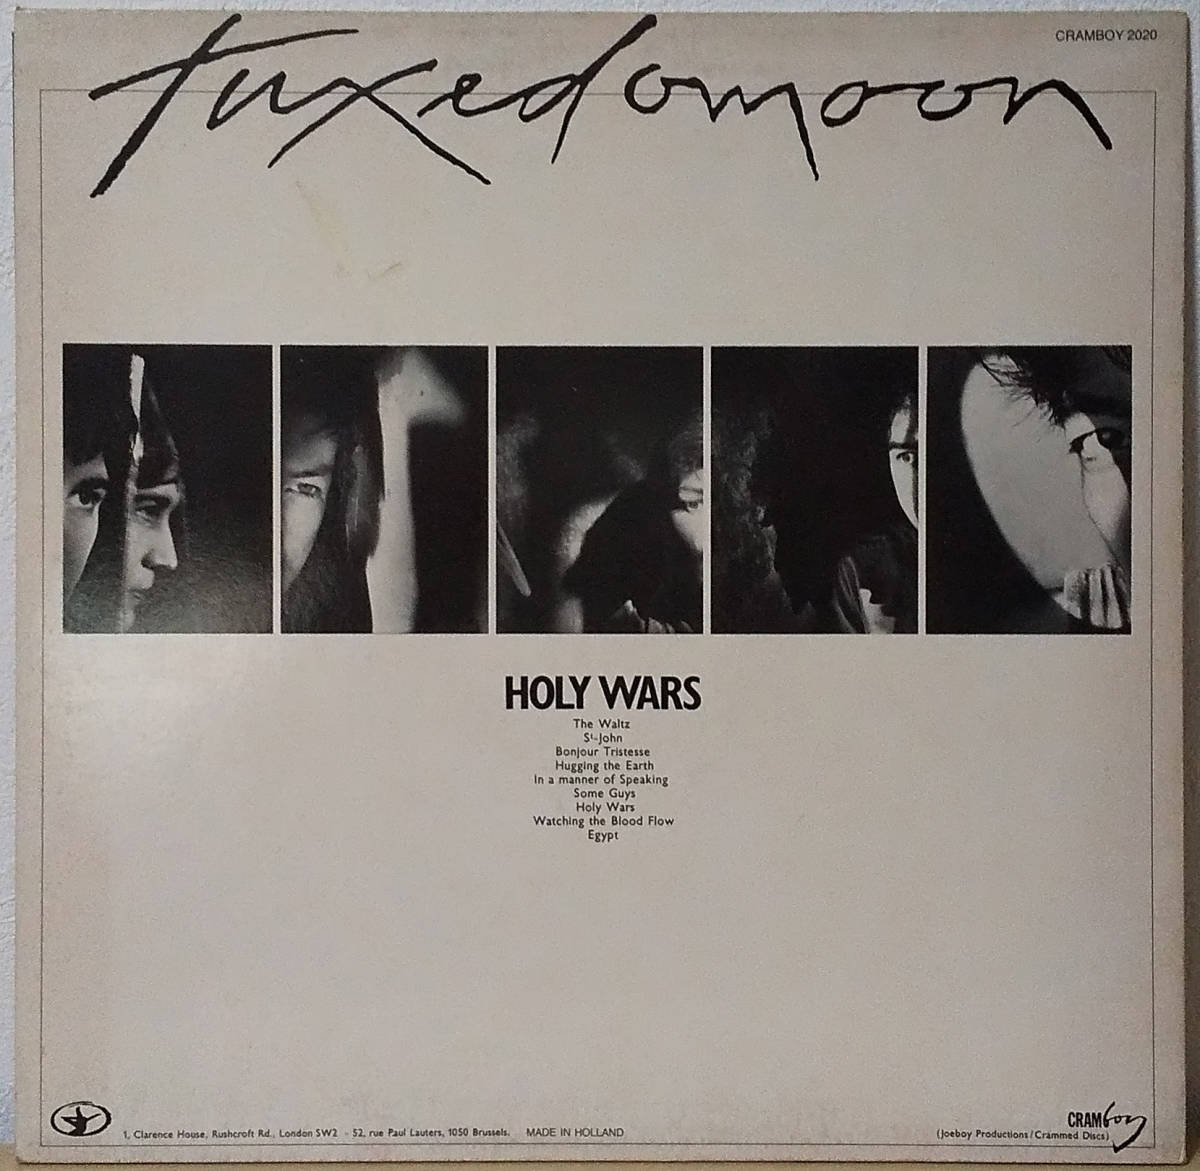 Tuxedomoon - Holy Wars ベルギー盤 LP Cramboy - Cboy 2020 タキシードムーン 1985年 Joeboy, Steven Brown, Blaine L. Reininger_画像2